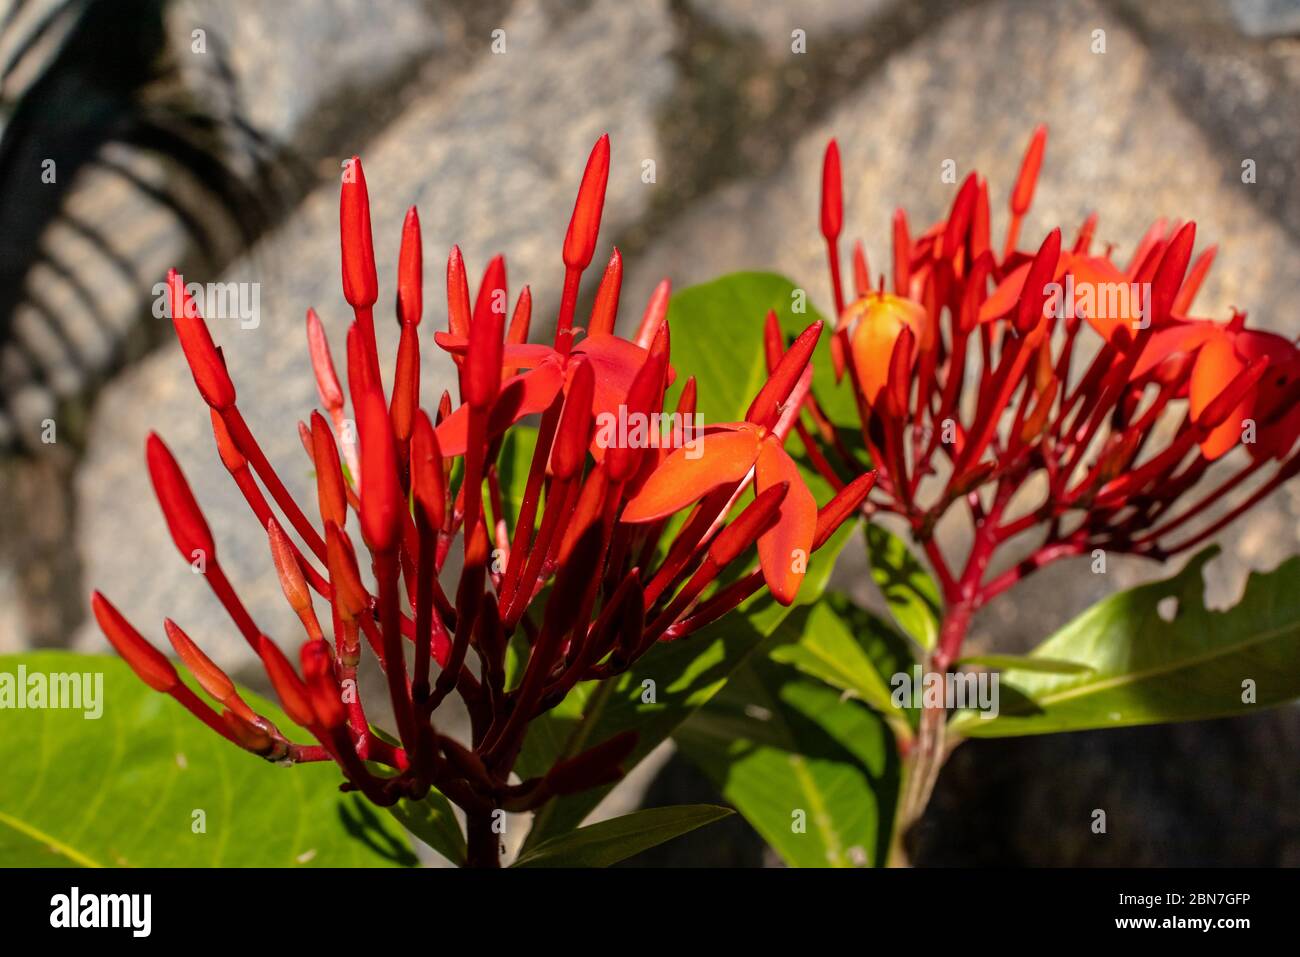 Flower, Ixora coccinea, common flowering shrub native to southern India, Bangladesh and Sri Lanka, still in bloom, Areal, Rio de Janeiro, Brazil Stock Photo